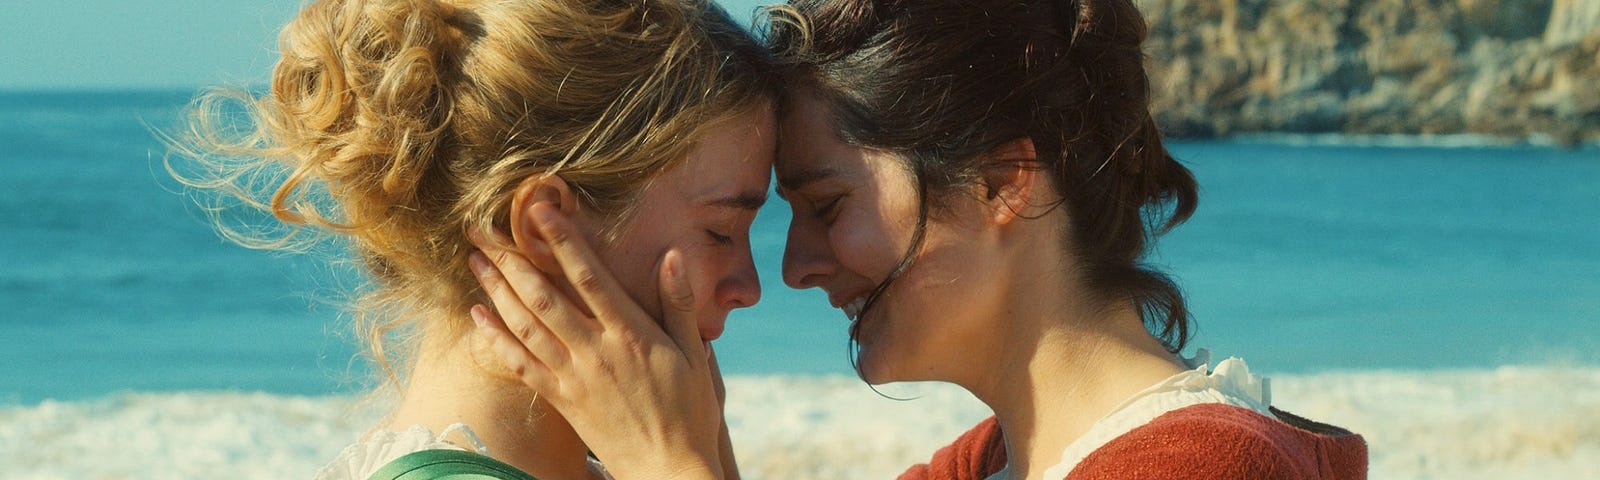 Two white women embrace on a beach.